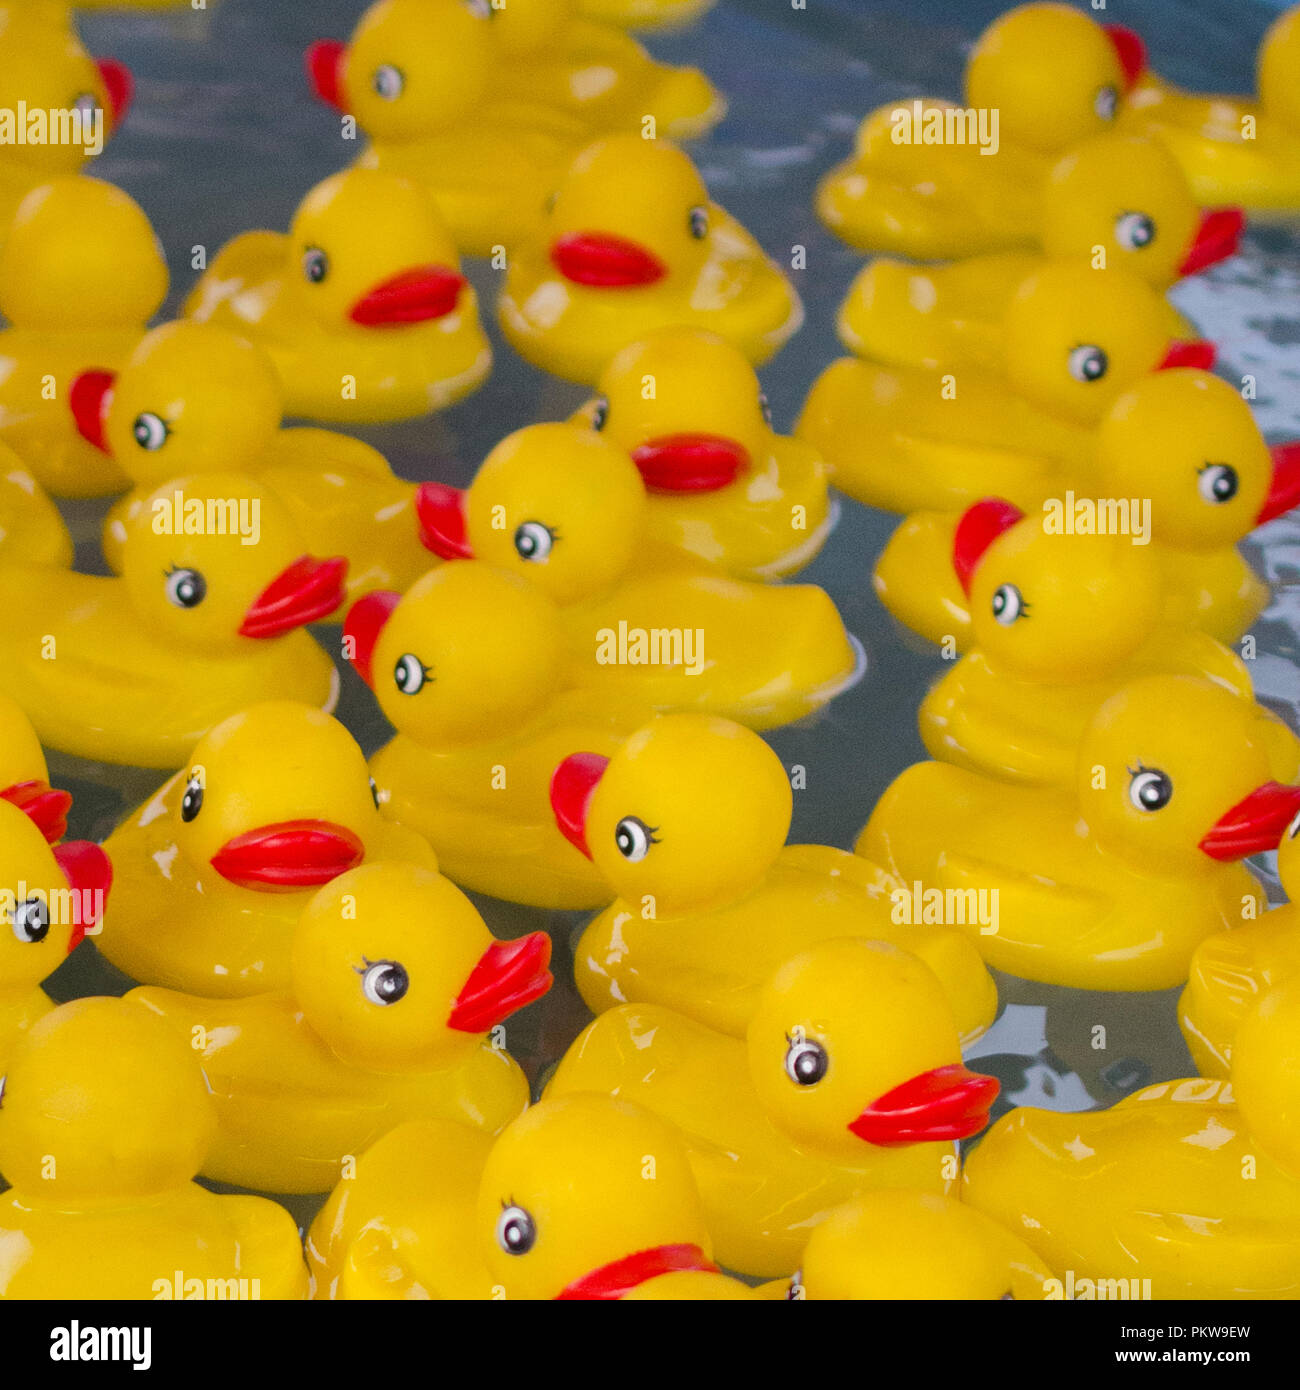 Floating rubber ducks Stock Photo